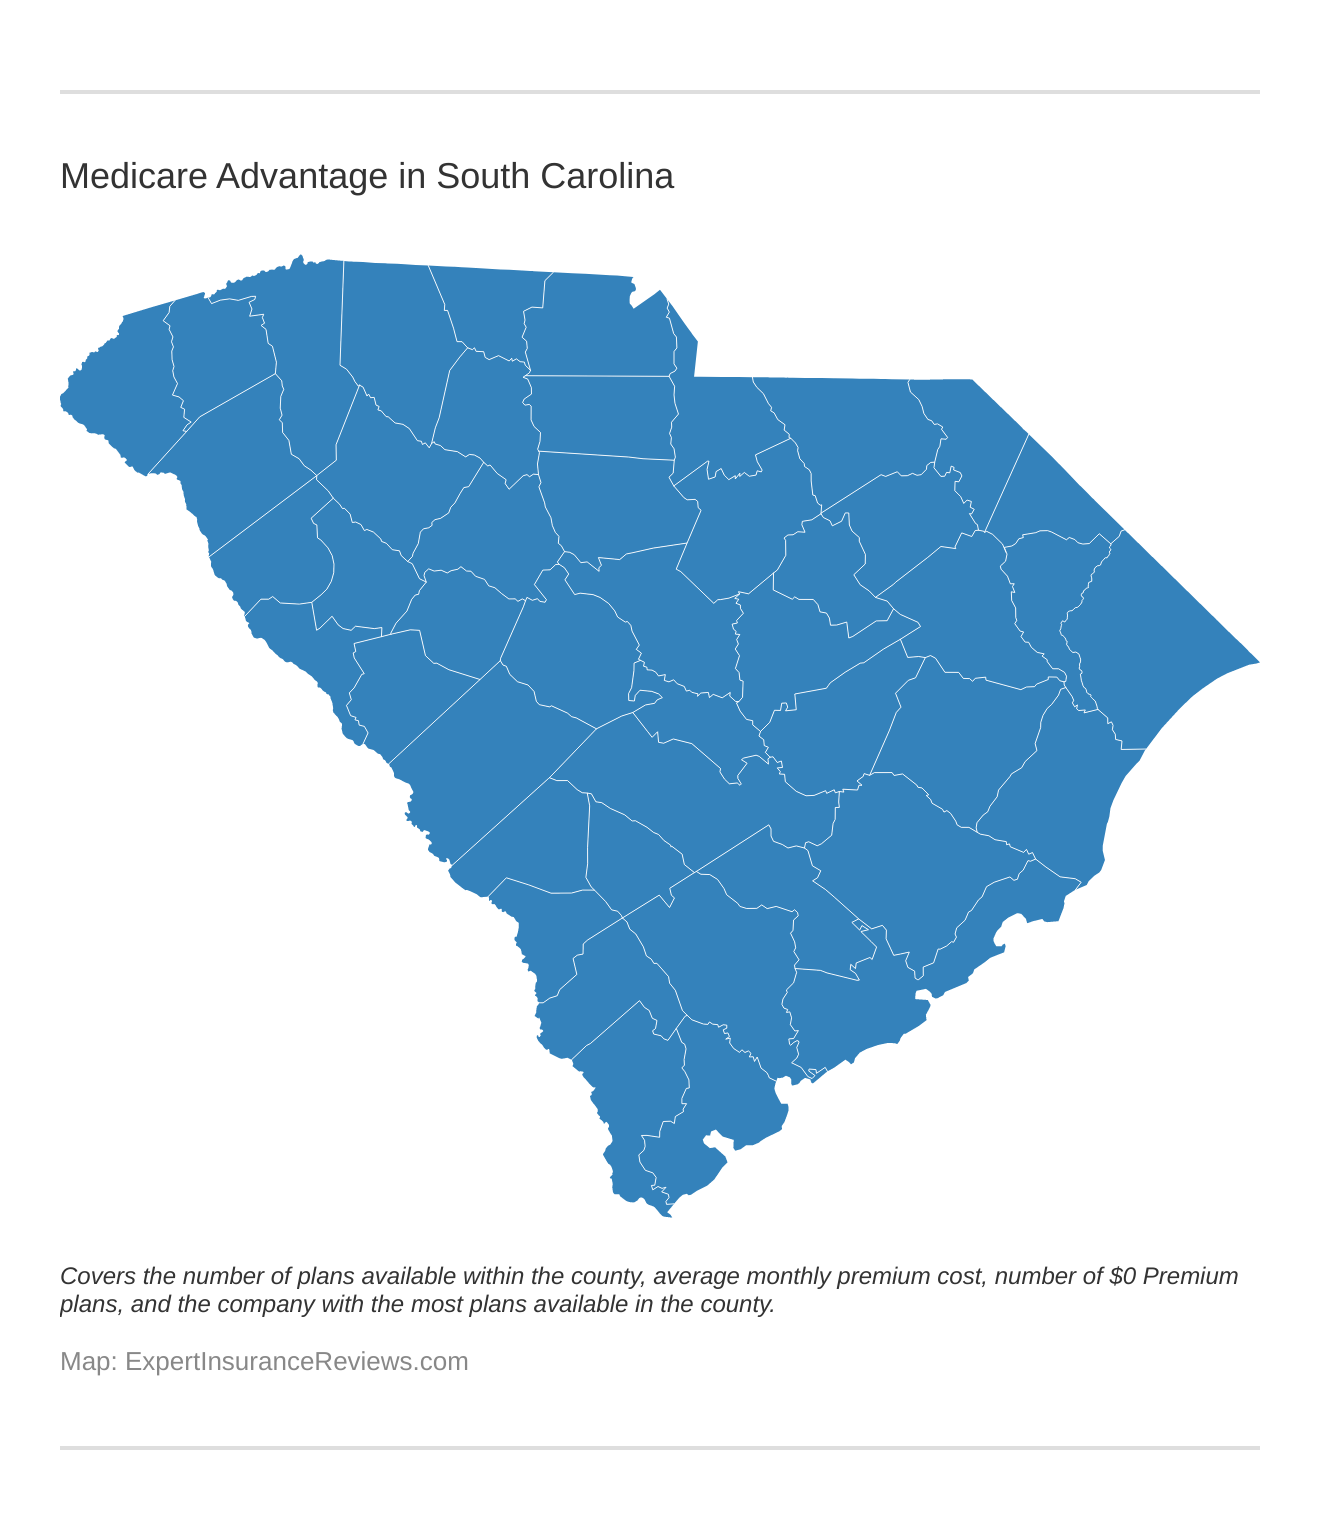 Medicare Advantage in South Carolina